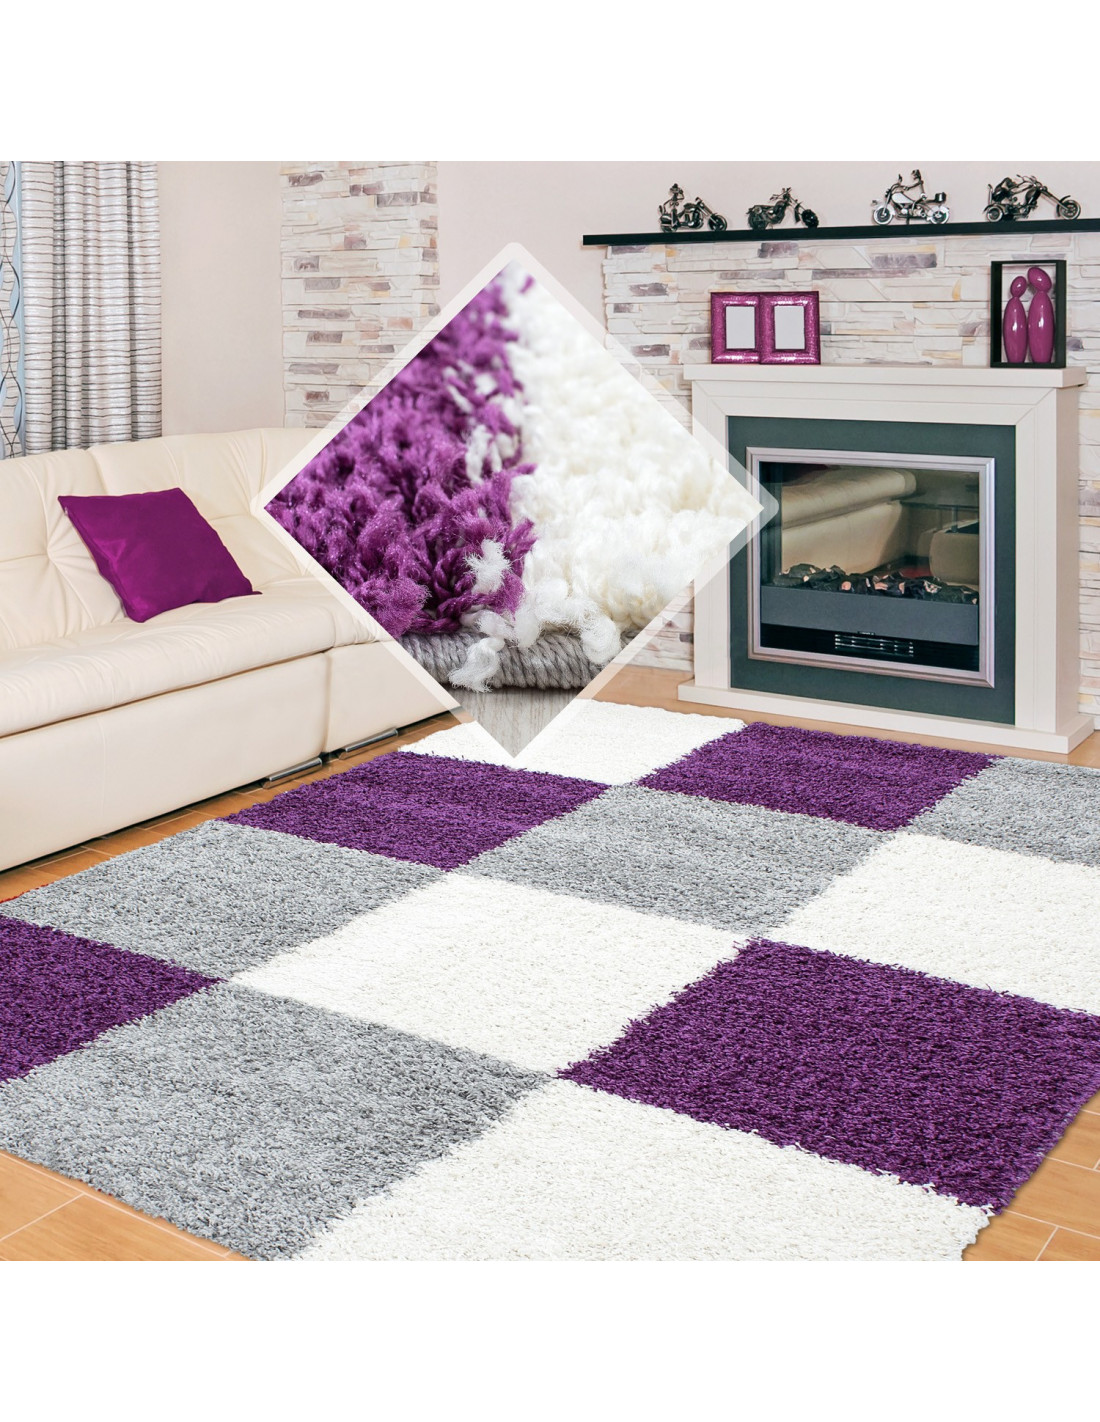 Shaggy carpet pile height 3cm checkered purple white gray